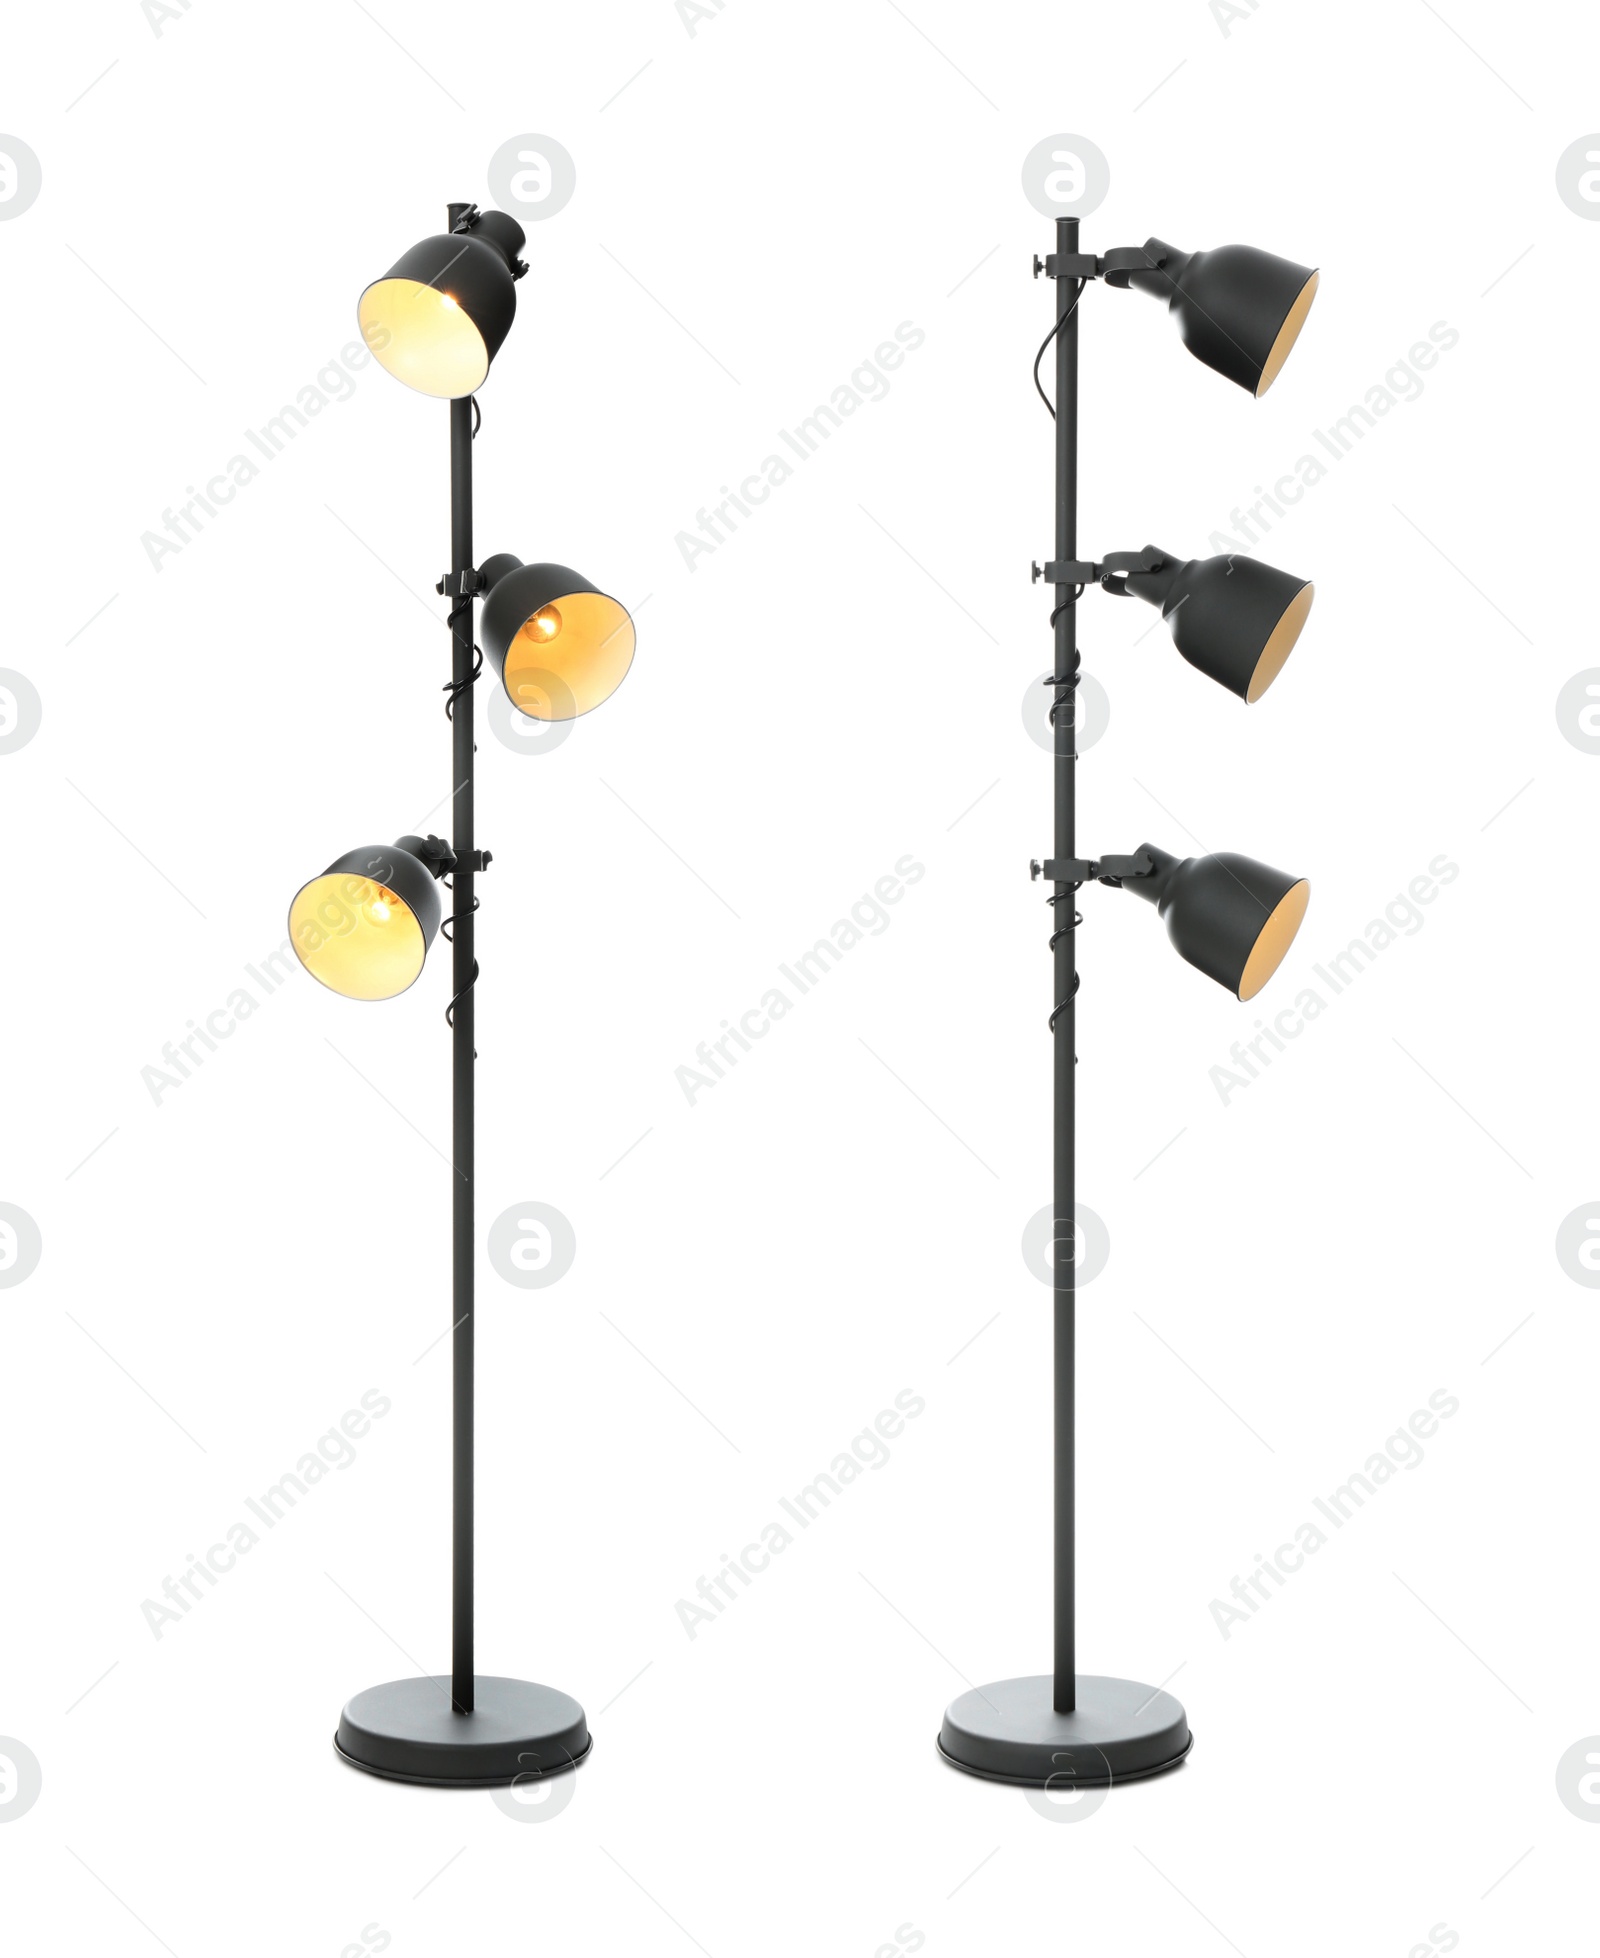 Image of Stylish floor lamps on white background, collage